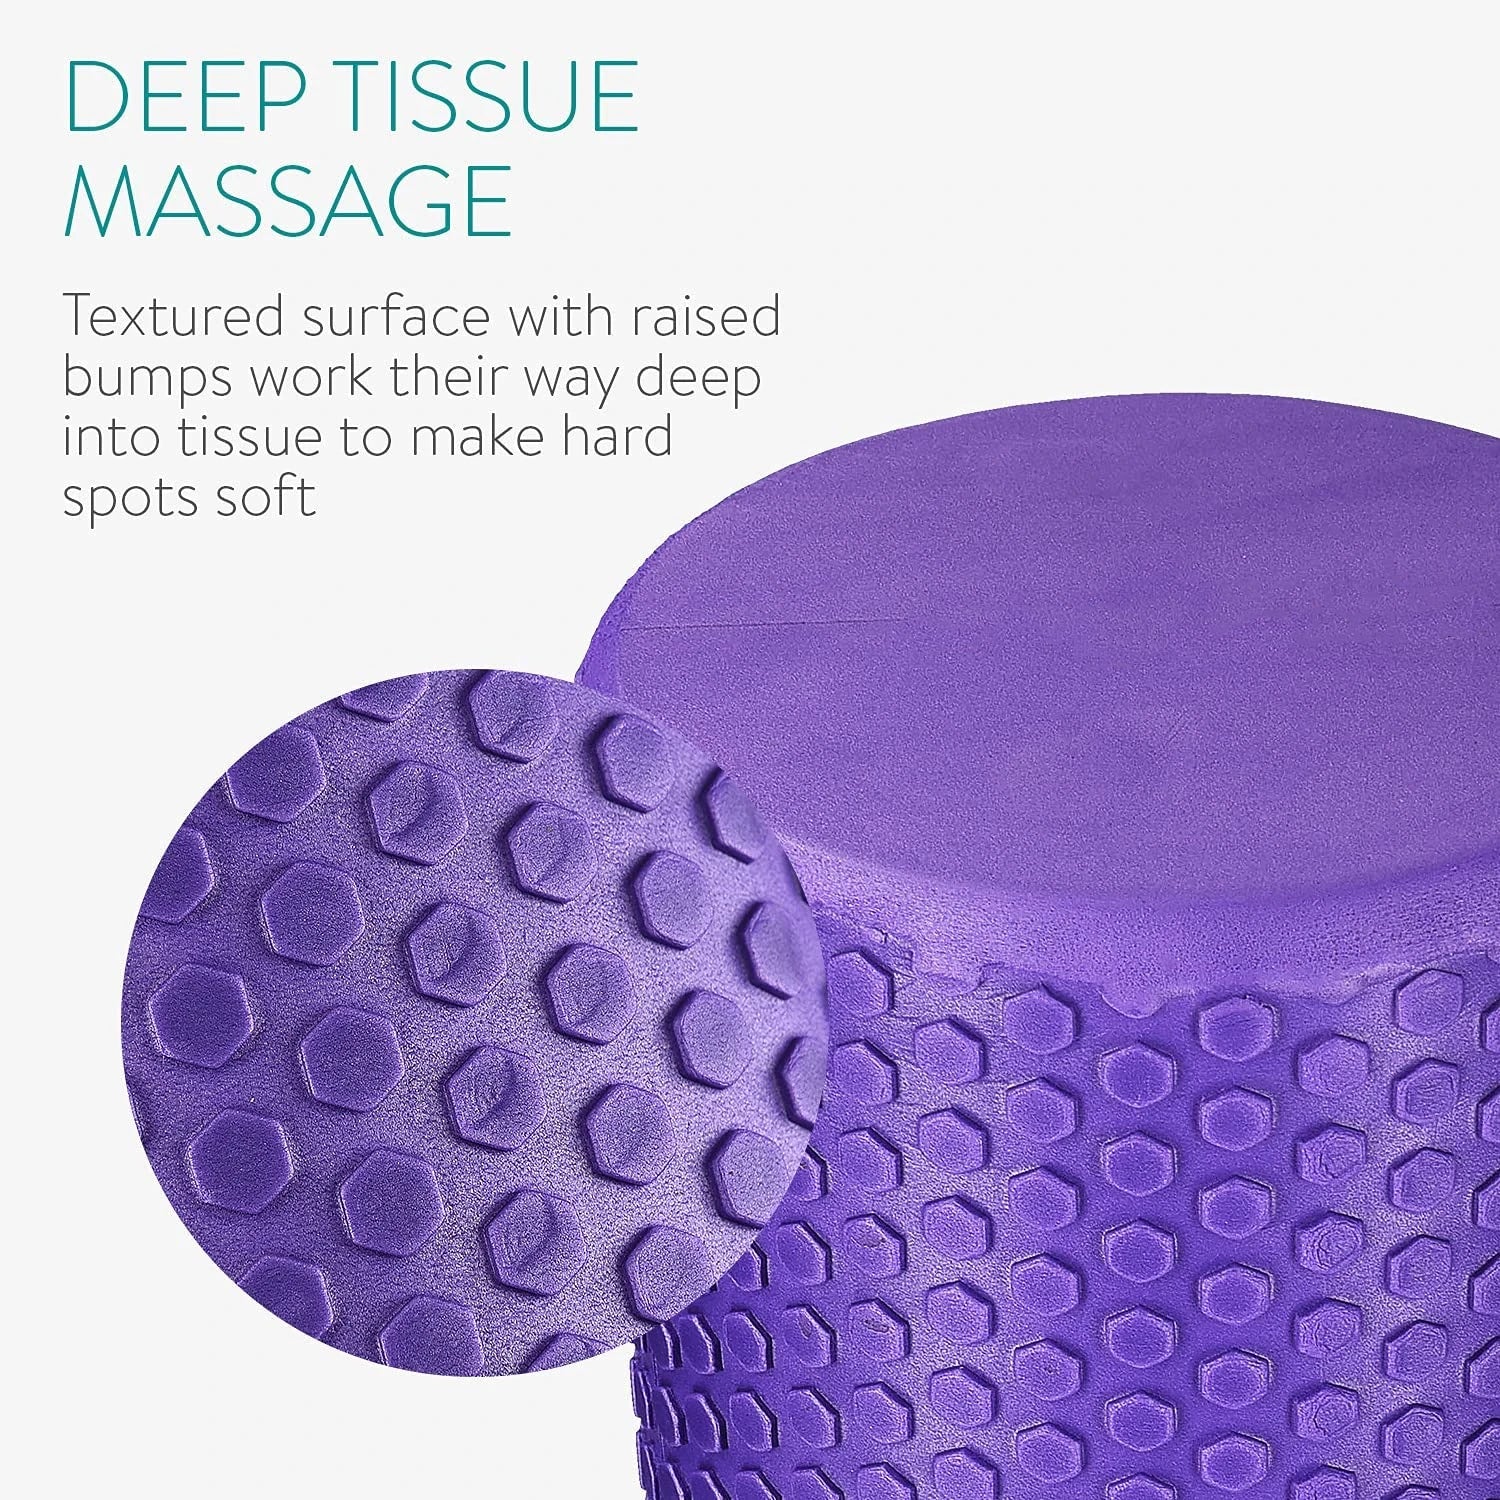 (Random Color Sent) Mini Yoga Foam Roller EVA Pilates Massage Roller Fitness Gym Muscle Massage Column Self Massage Tool